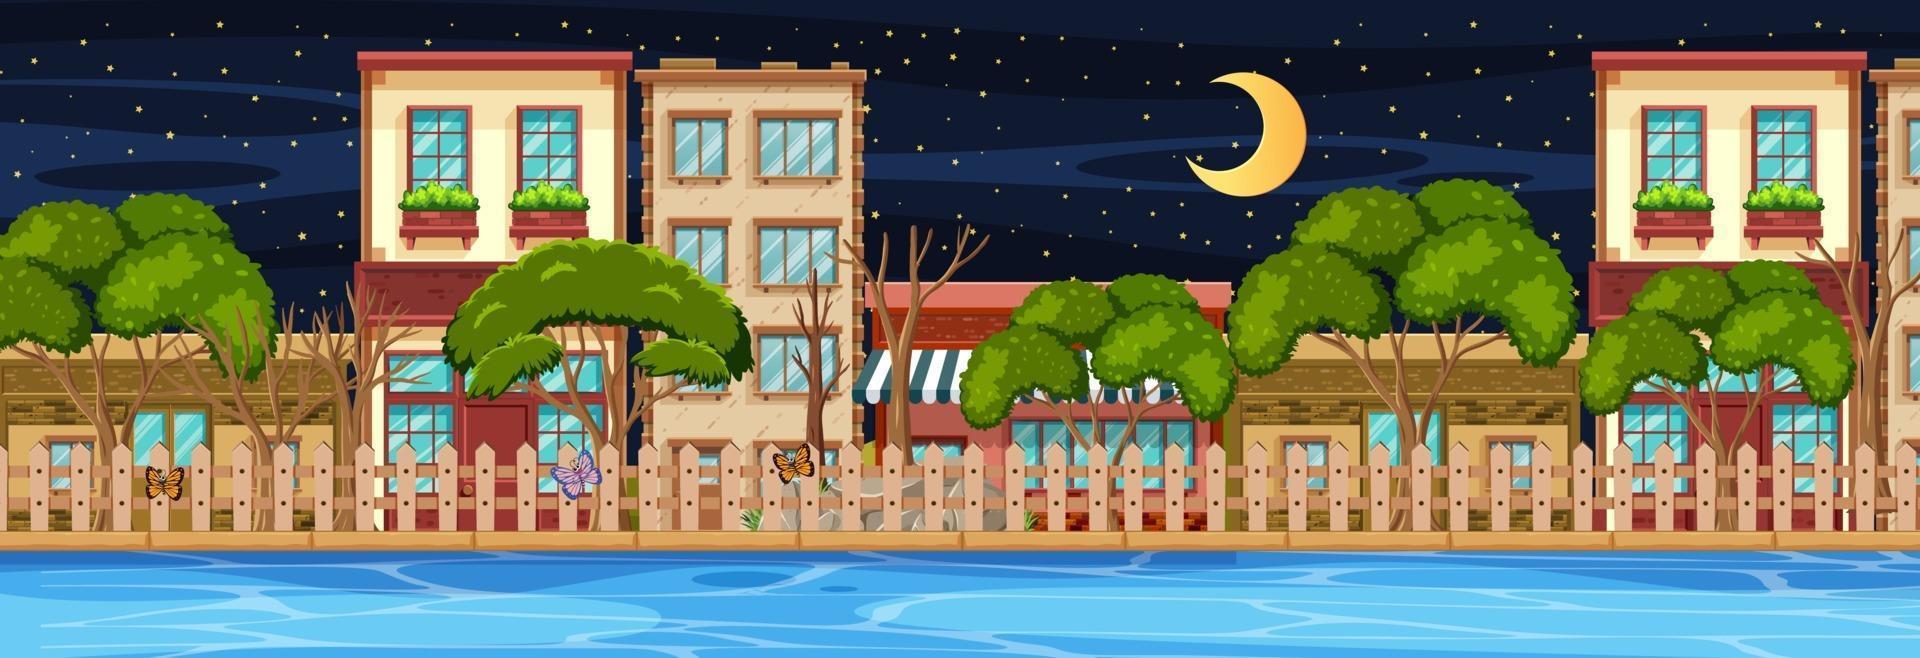 Many buildings along the river horizontal scene at night vector